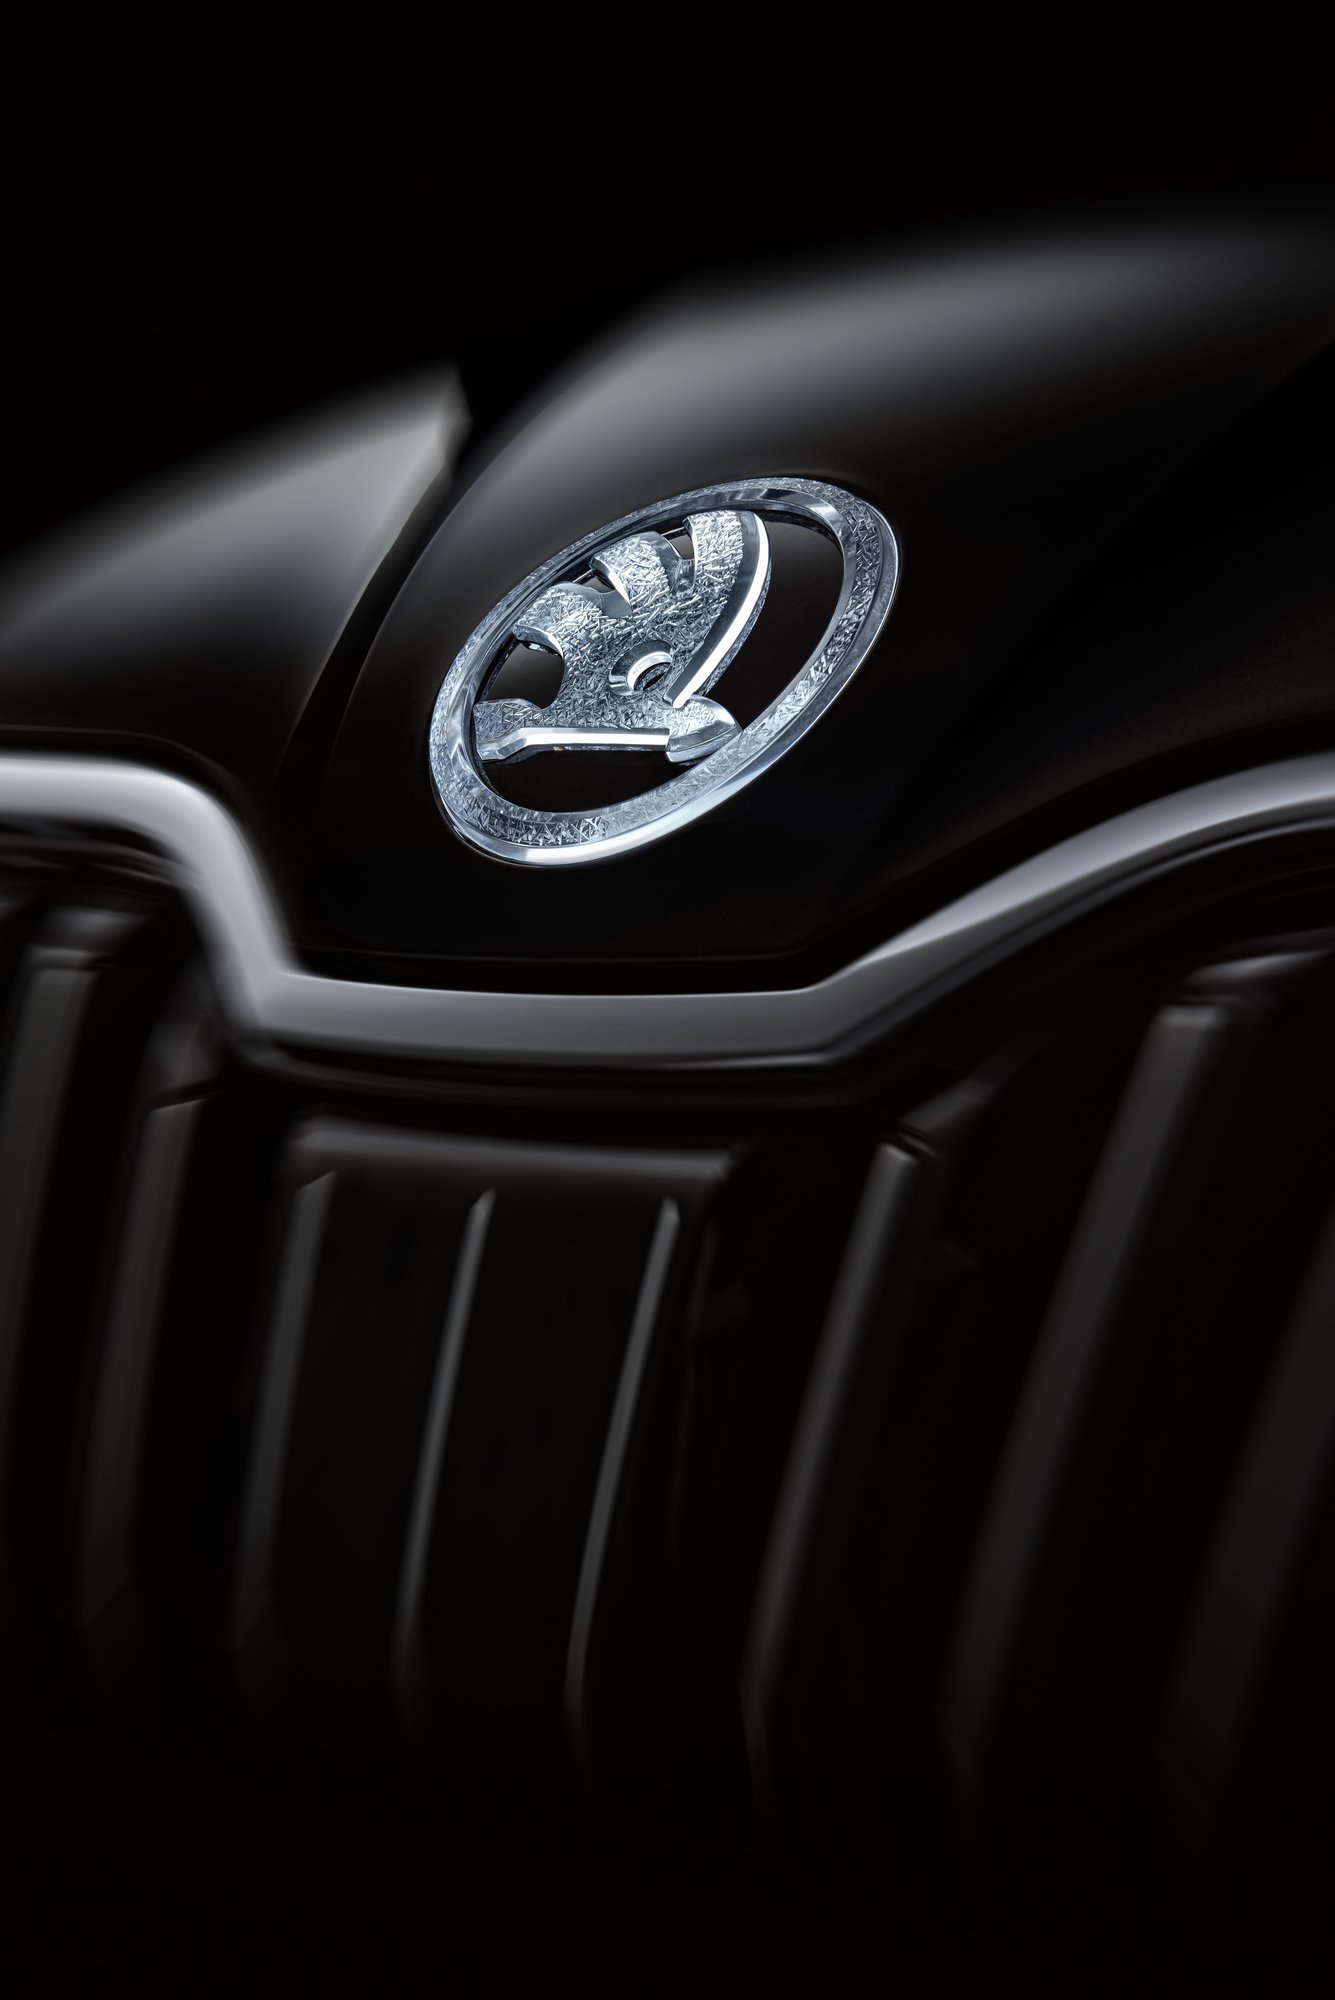 Logo automobilky je vyrobeno z křišťálového skla, Škoda Superb Black Crystal.